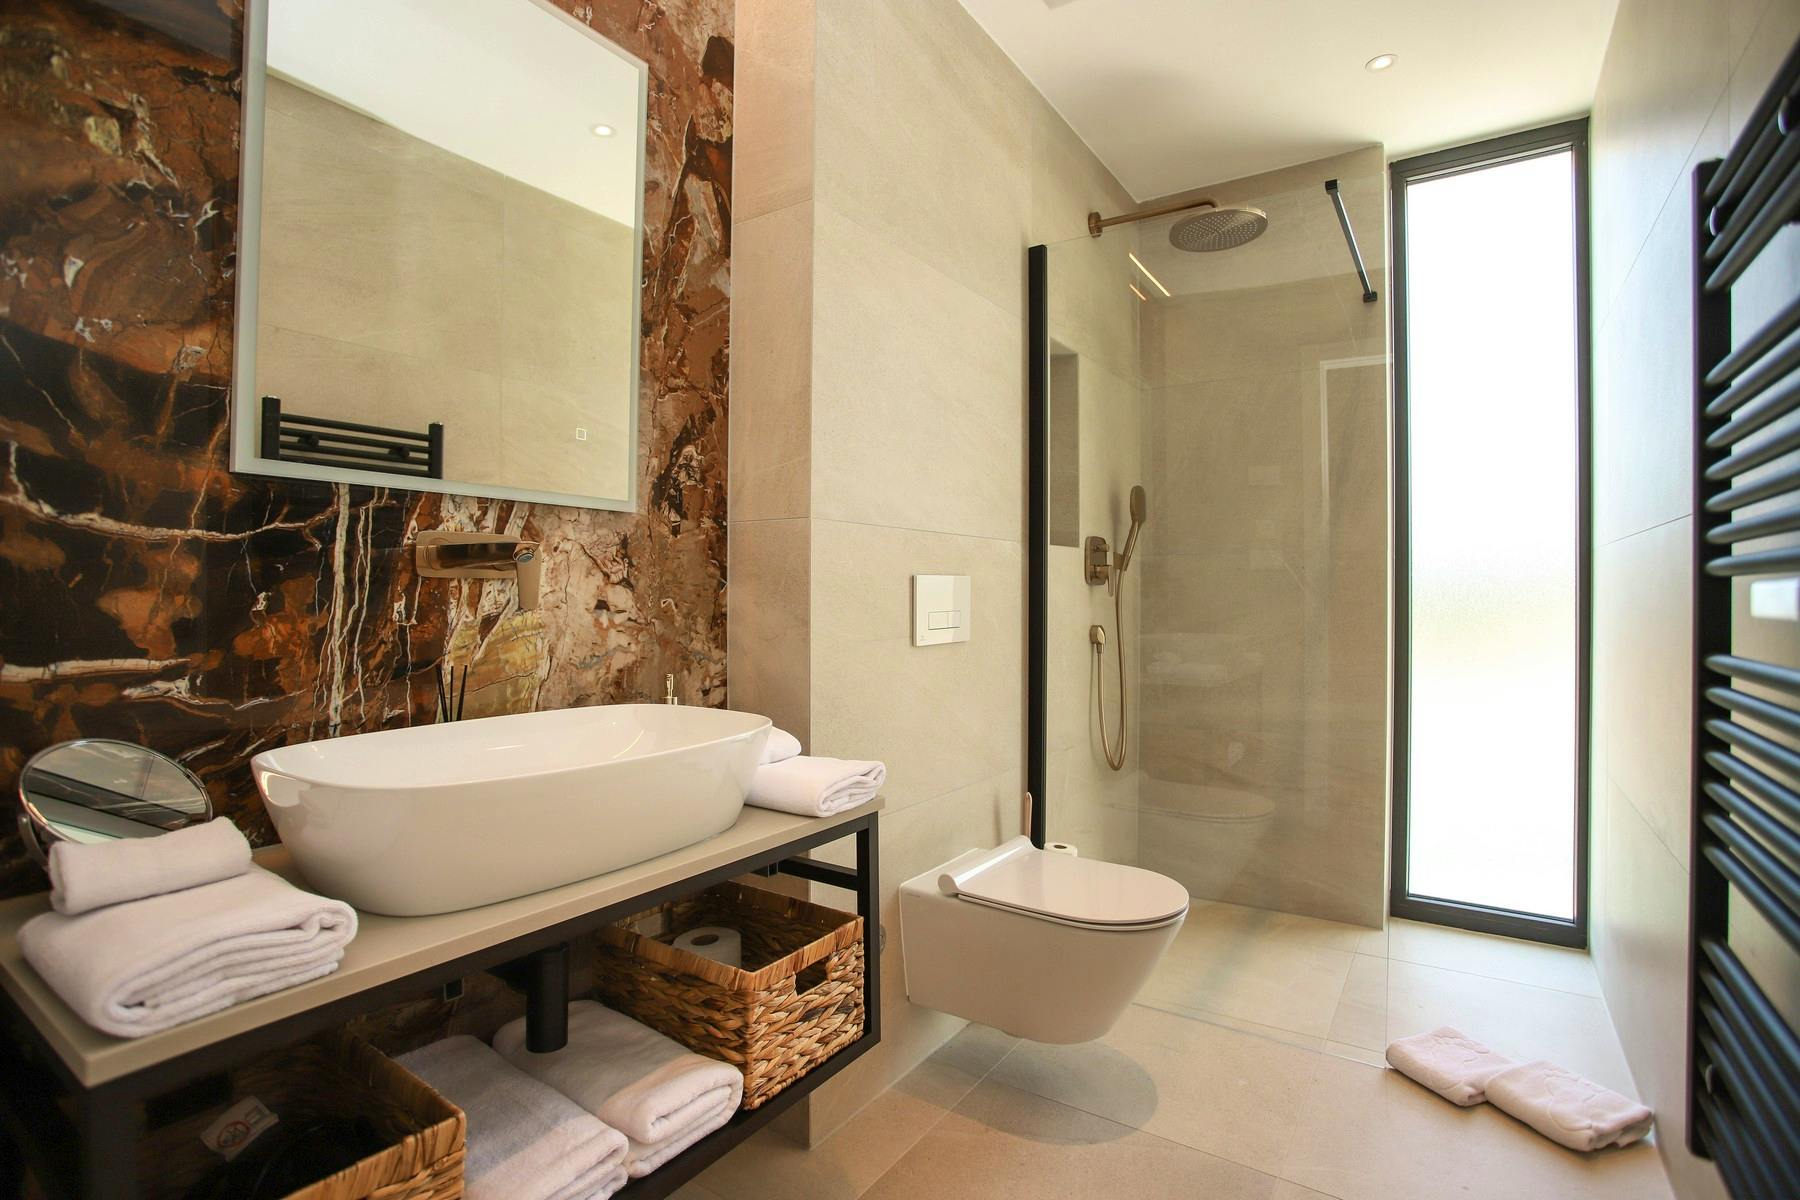 Spacious modern bathroom with walk-in shower